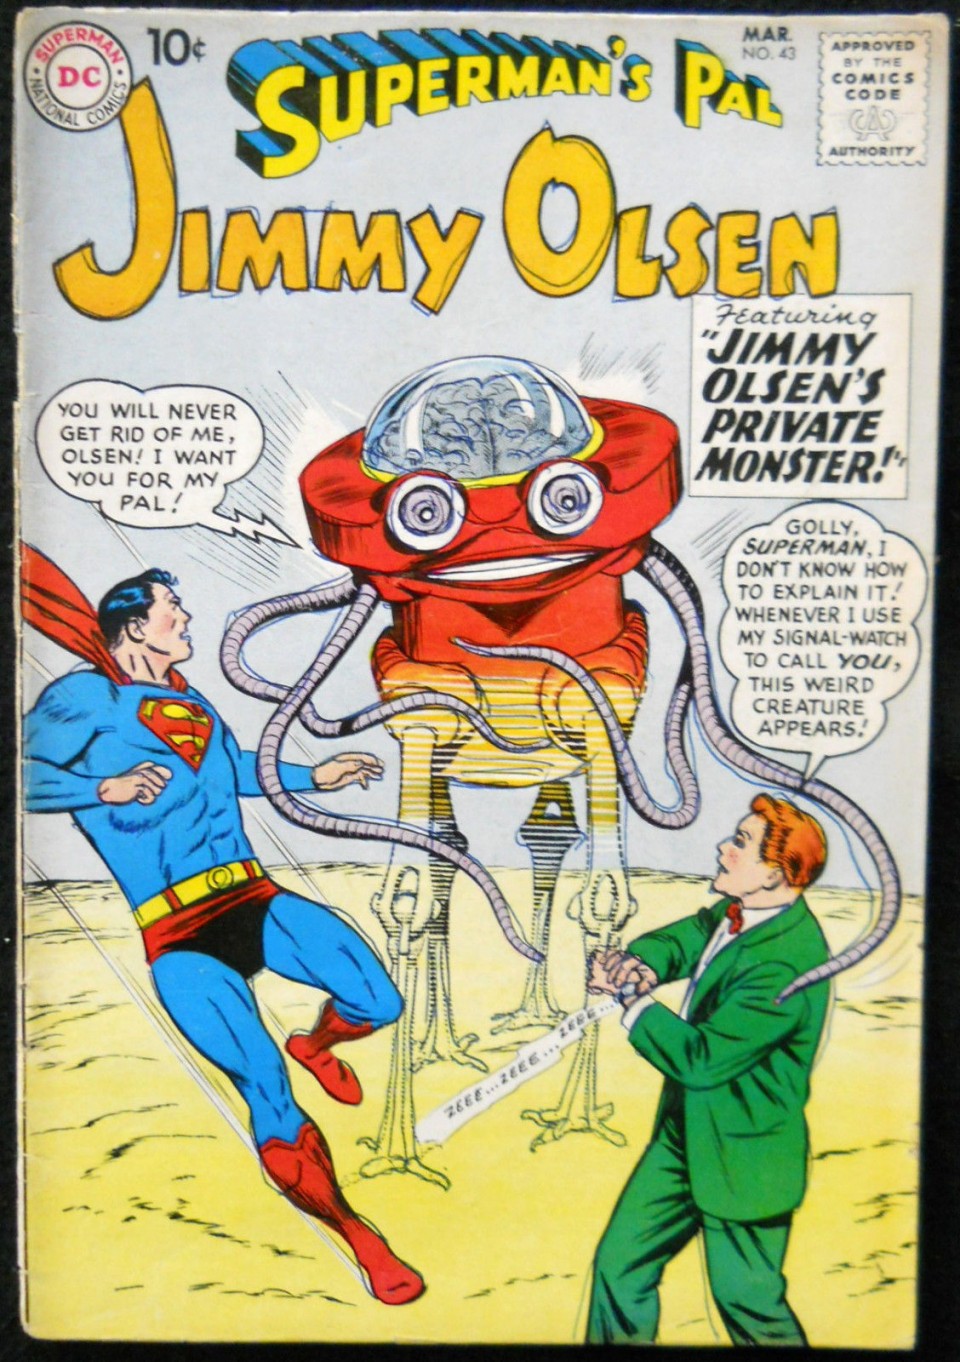 SUPERMAN'S PAL JIMMY OLSEN #43 GD - Silver Age Comics